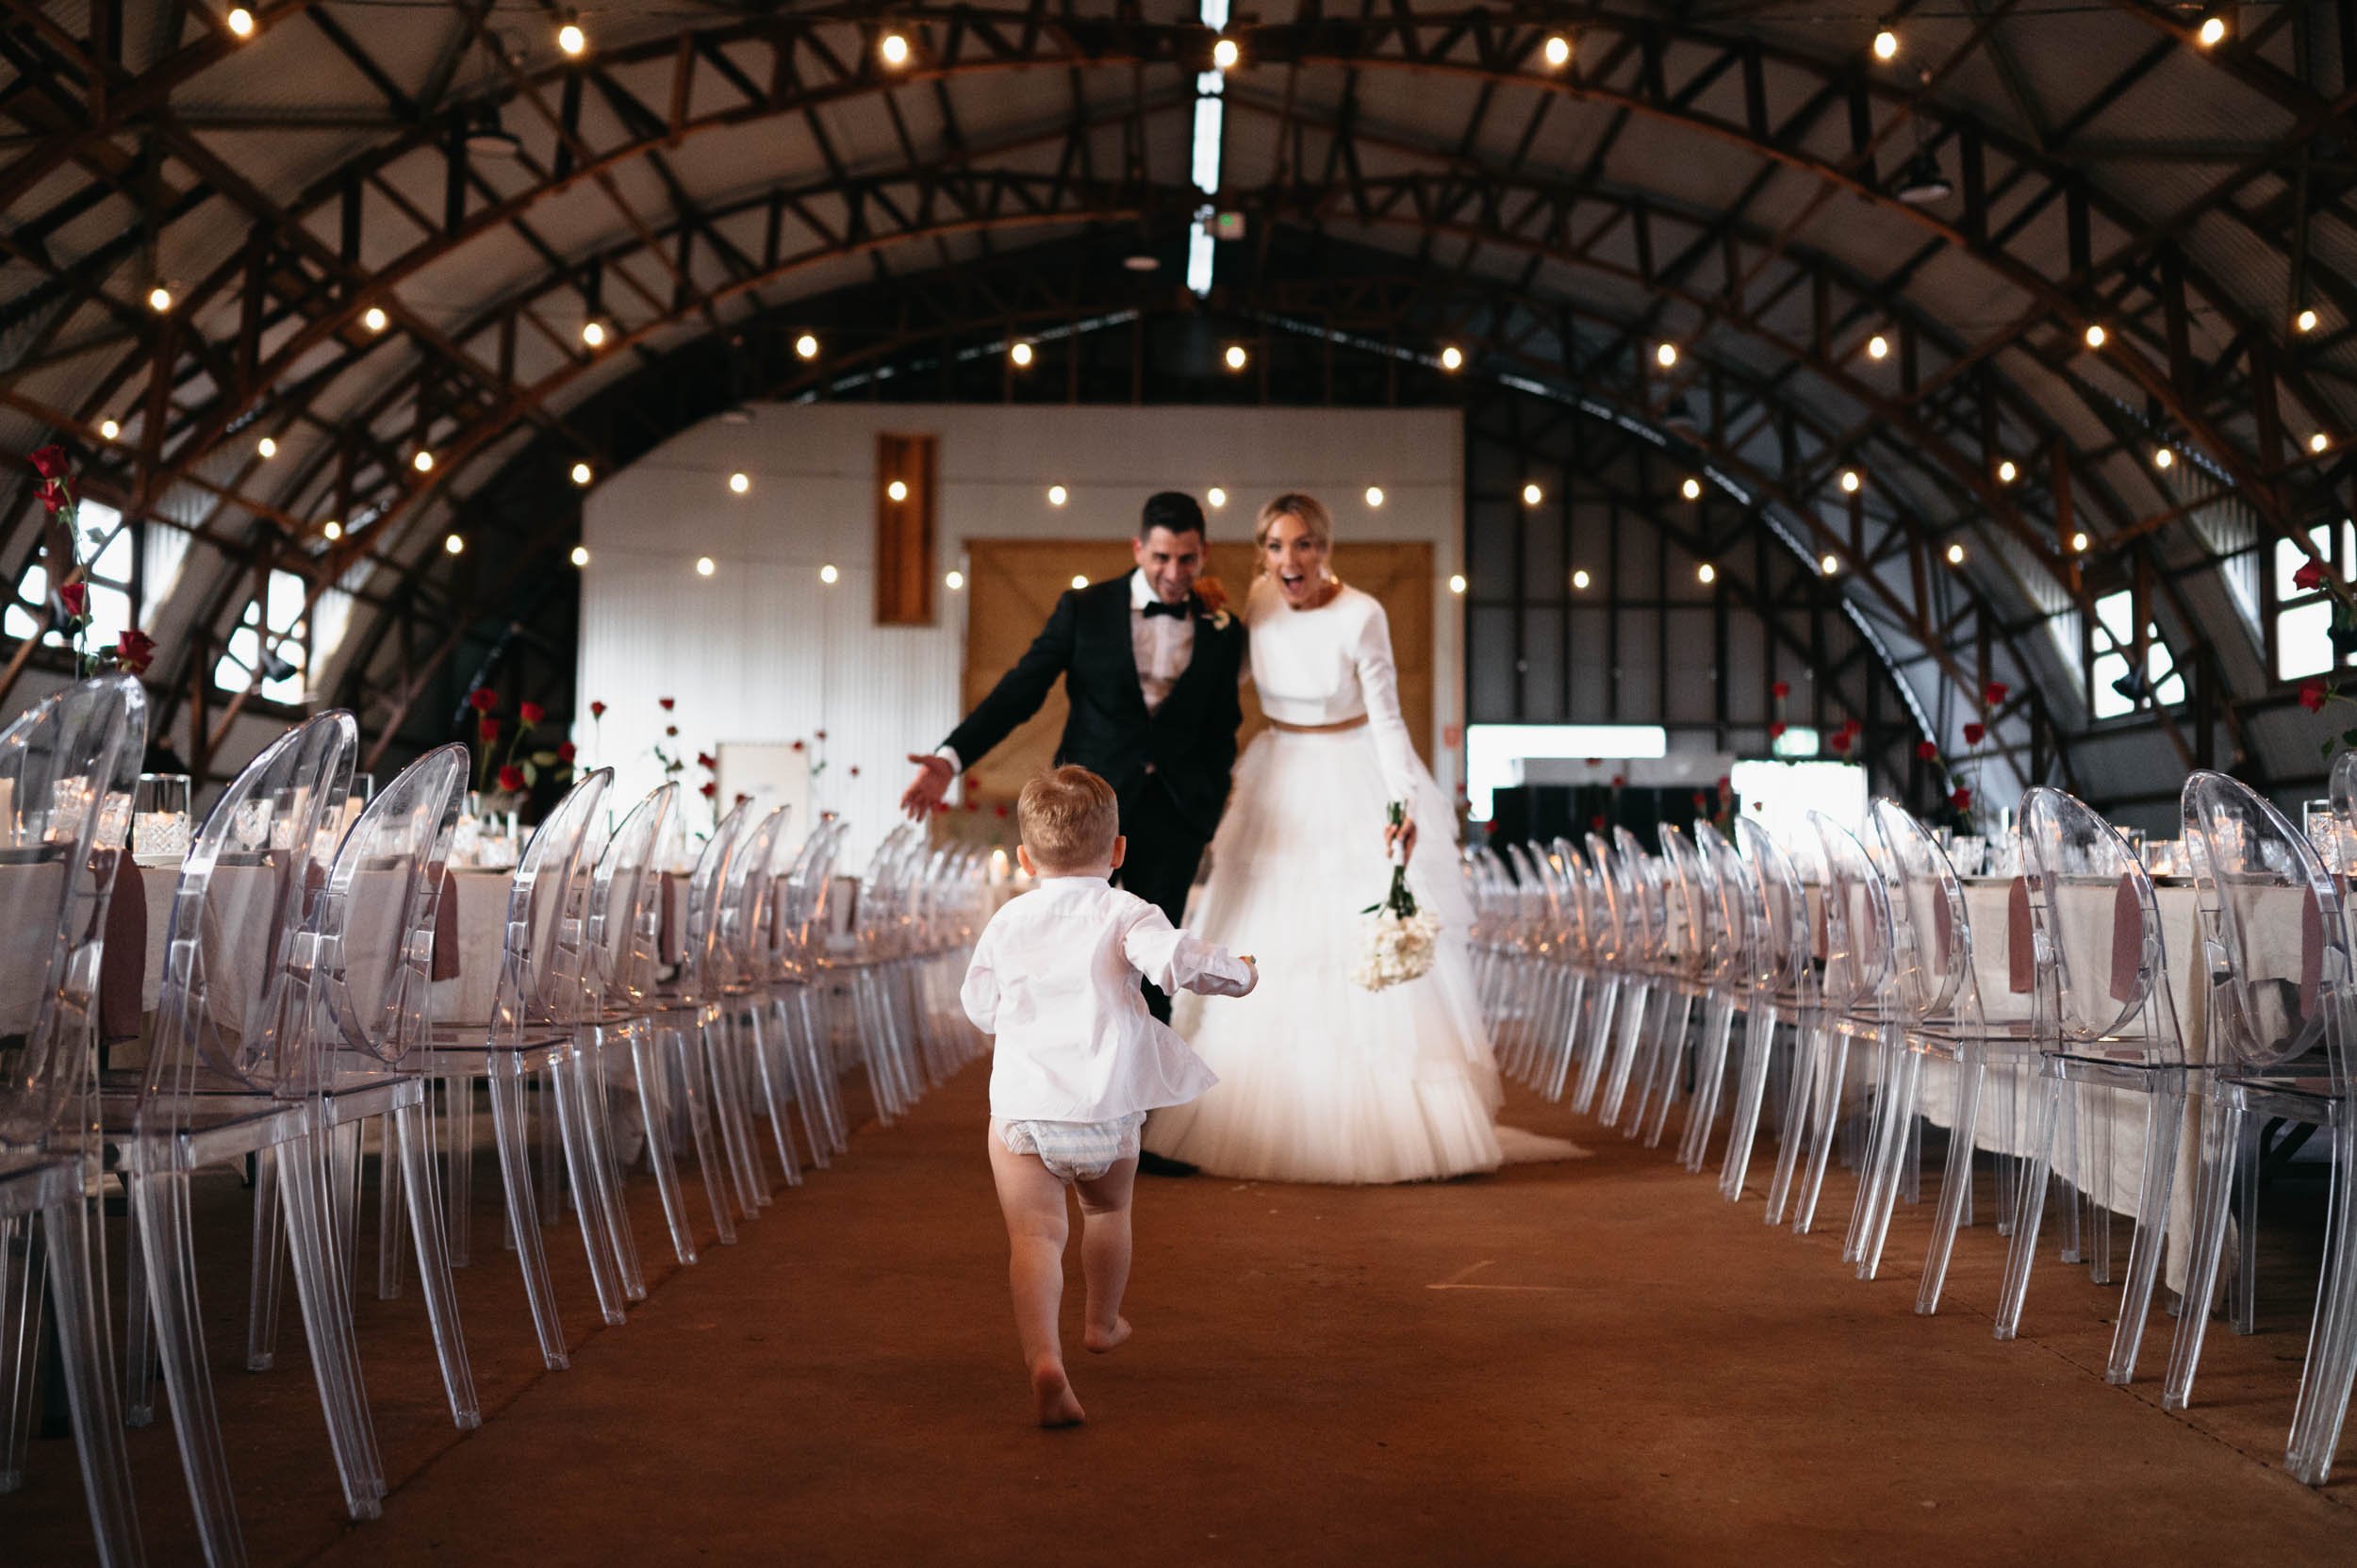 The Raw Photographer - Cairns Wedding Photographer - Mareeba Tablelands - Queensland photography - Kyha dress - luxury-36.jpg